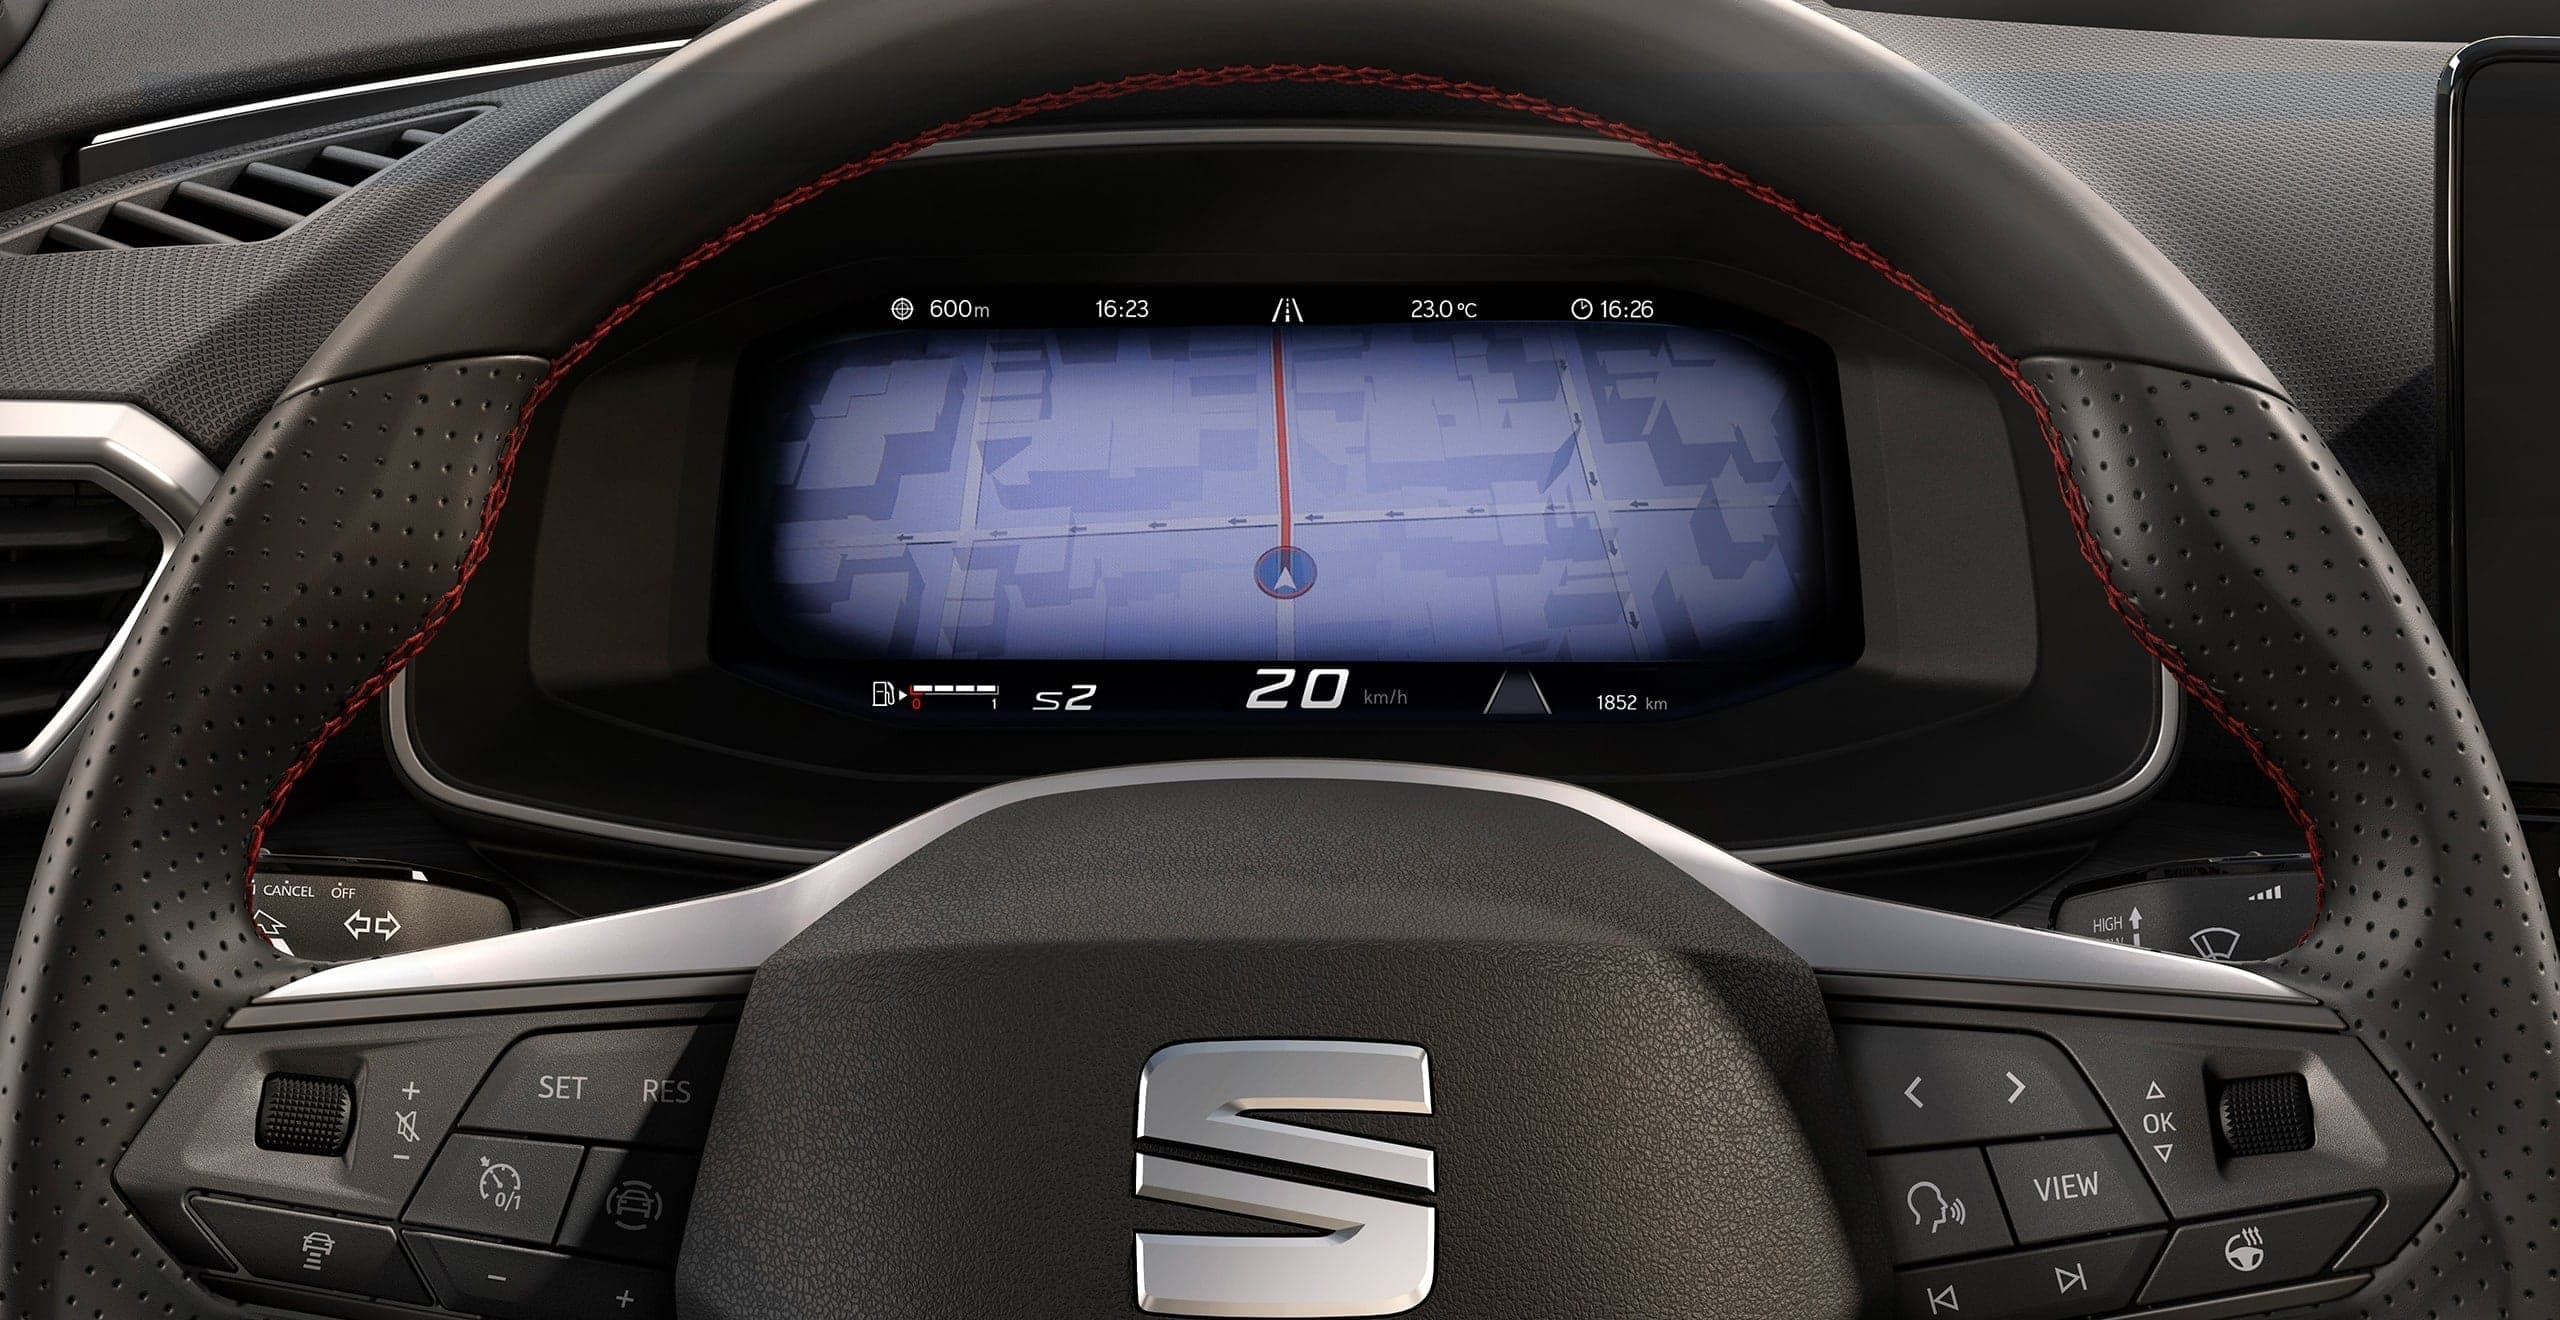 New SEAT Leon 10” Navigation System